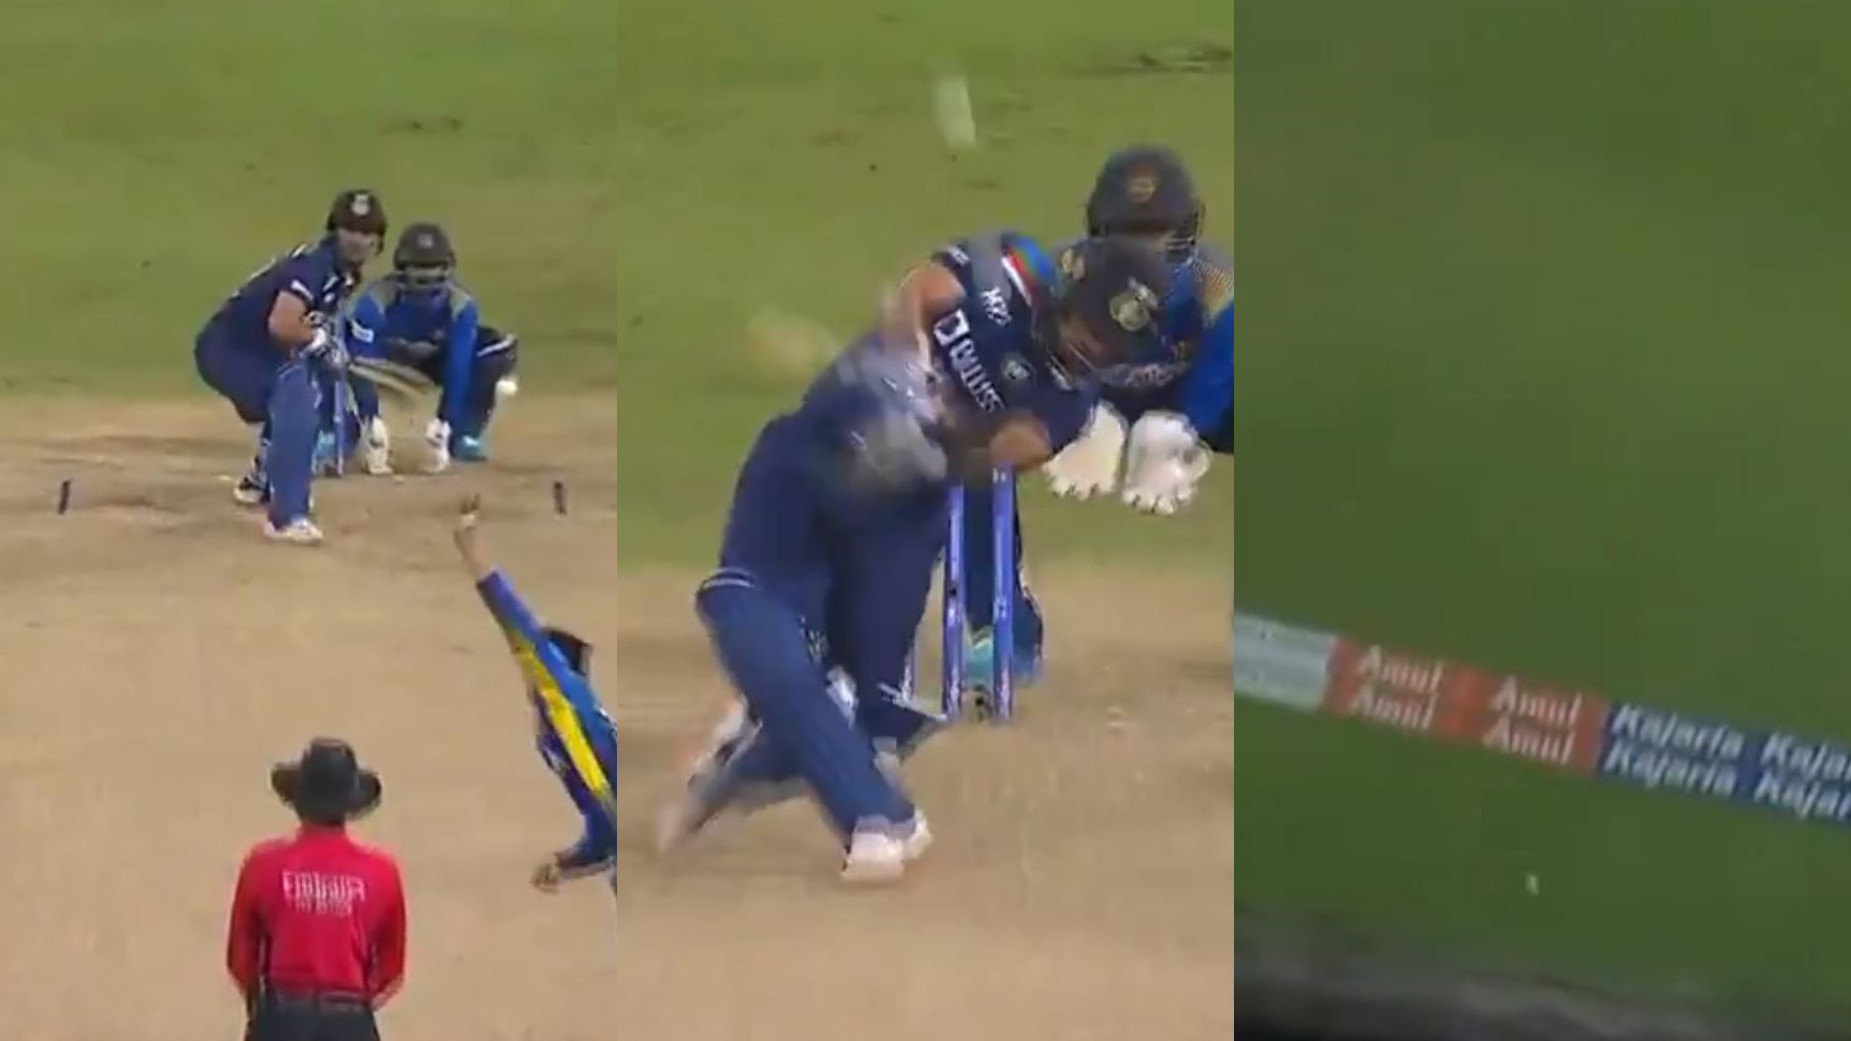 SL v IND 2021: WATCH- Ishan Kishan hits a six first ball he faces on ODI debut